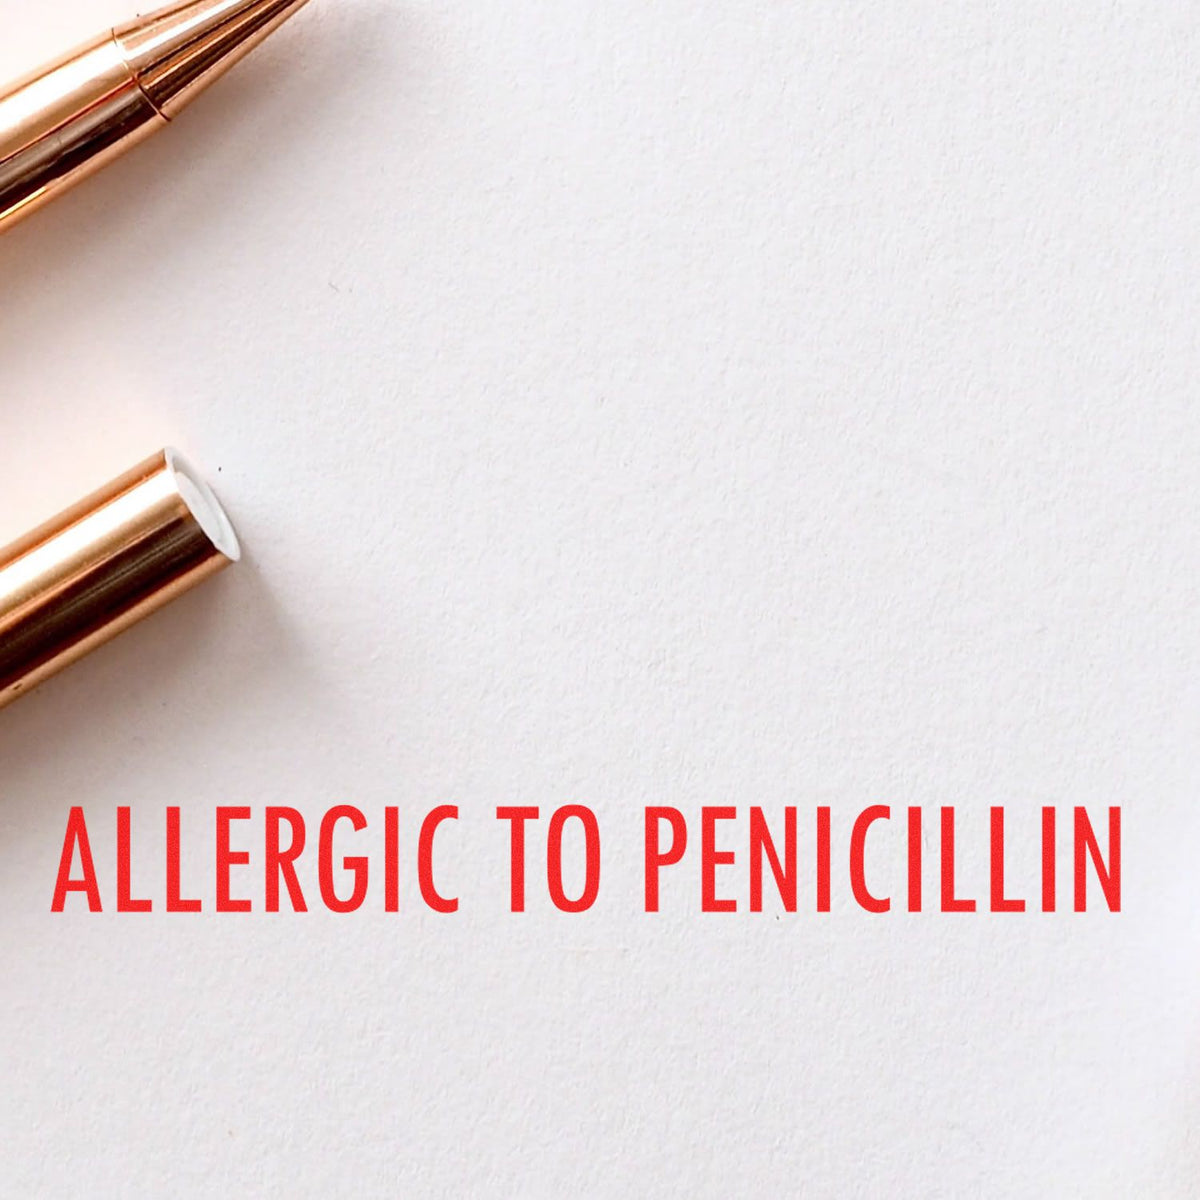 Allergic To Penicillin Rubber Stamp In Use Photo